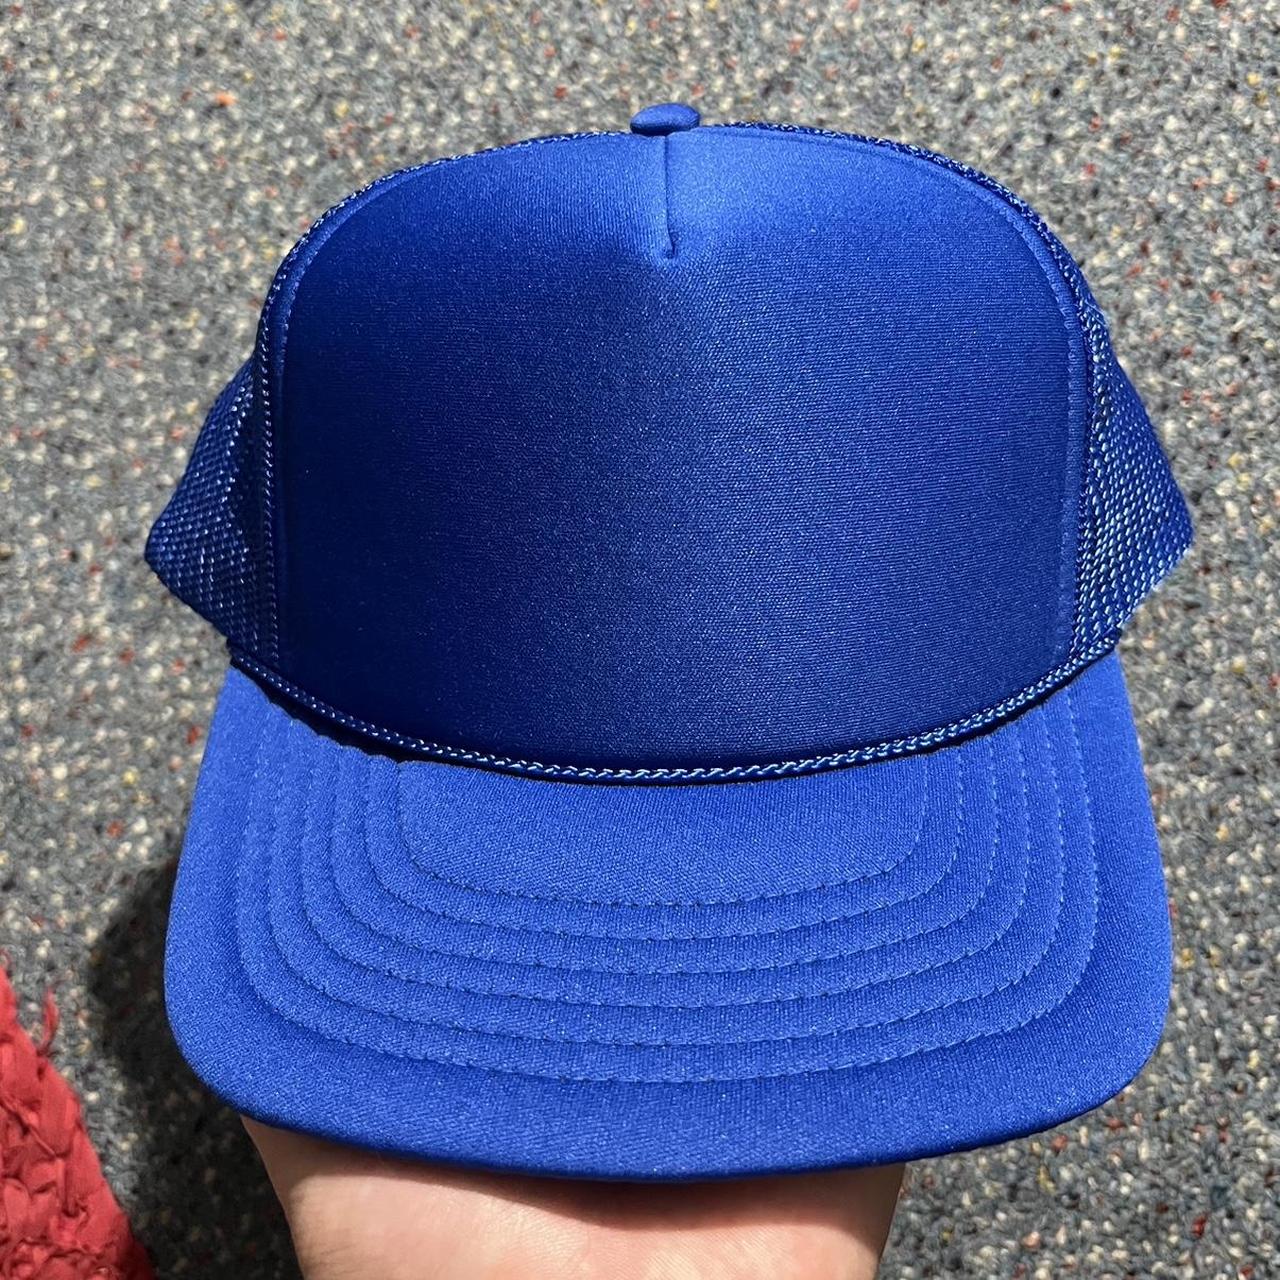 Men's Caps - Blue